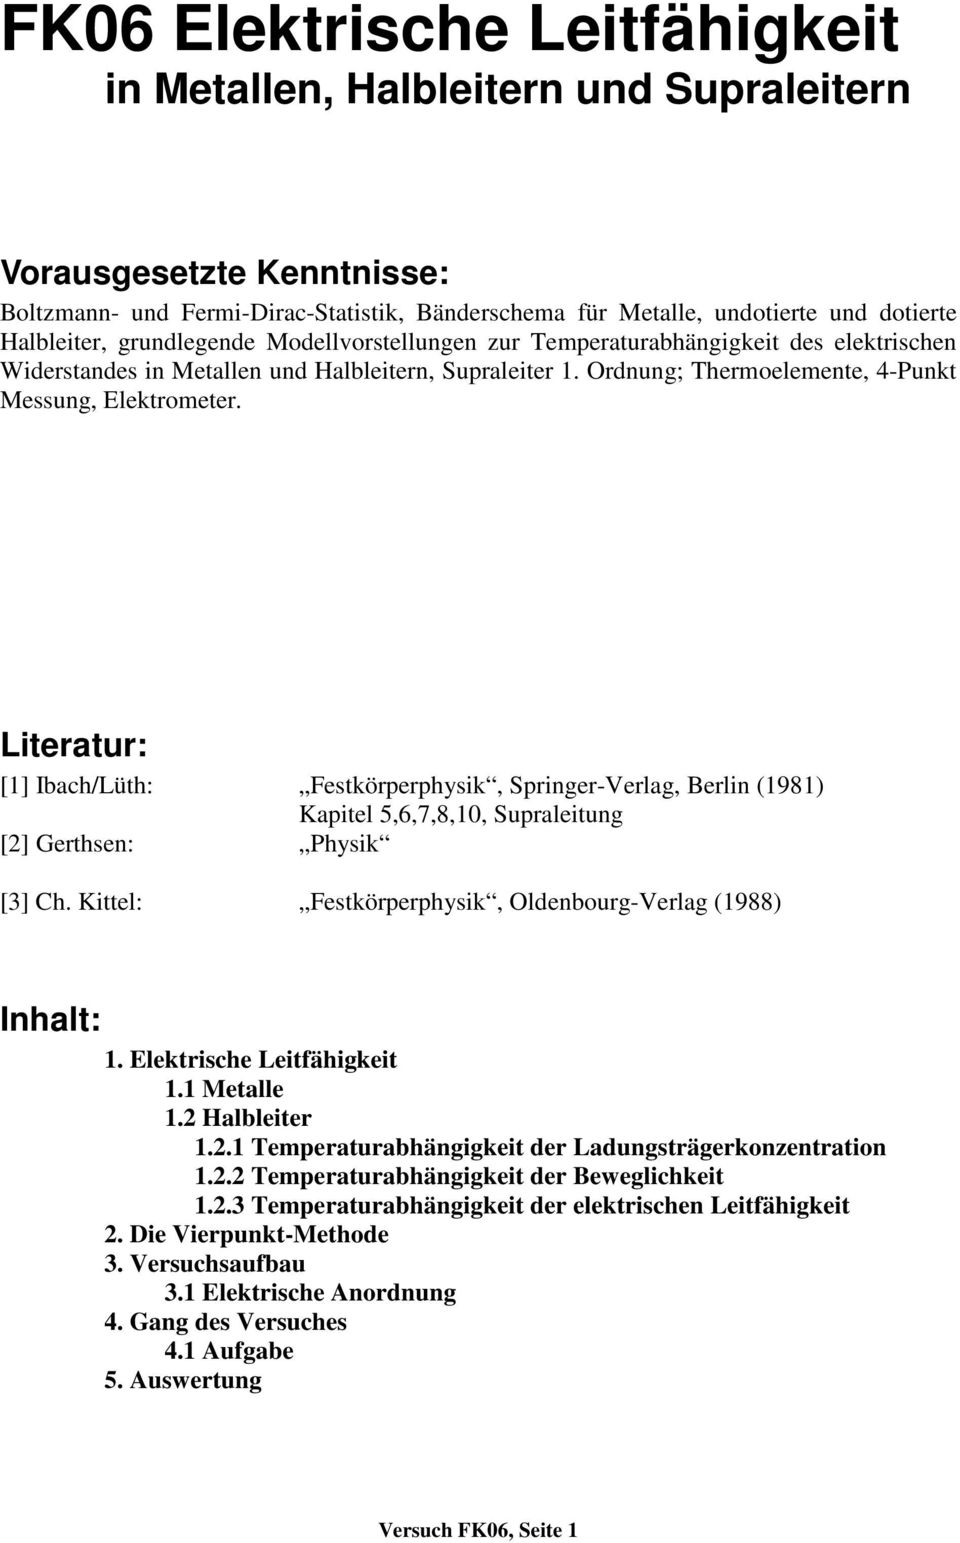 Literatur: [1] Ibach/Lüth: Festkörperphysik, Springer-Verlag, Berlin (1981) Kapitel 5,6,7,8,10, Supraleitung [2] Gerthsen: Physik [3] Ch. Kittel: Festkörperphysik, Oldenbourg-Verlag (1988) Inhalt: 1.